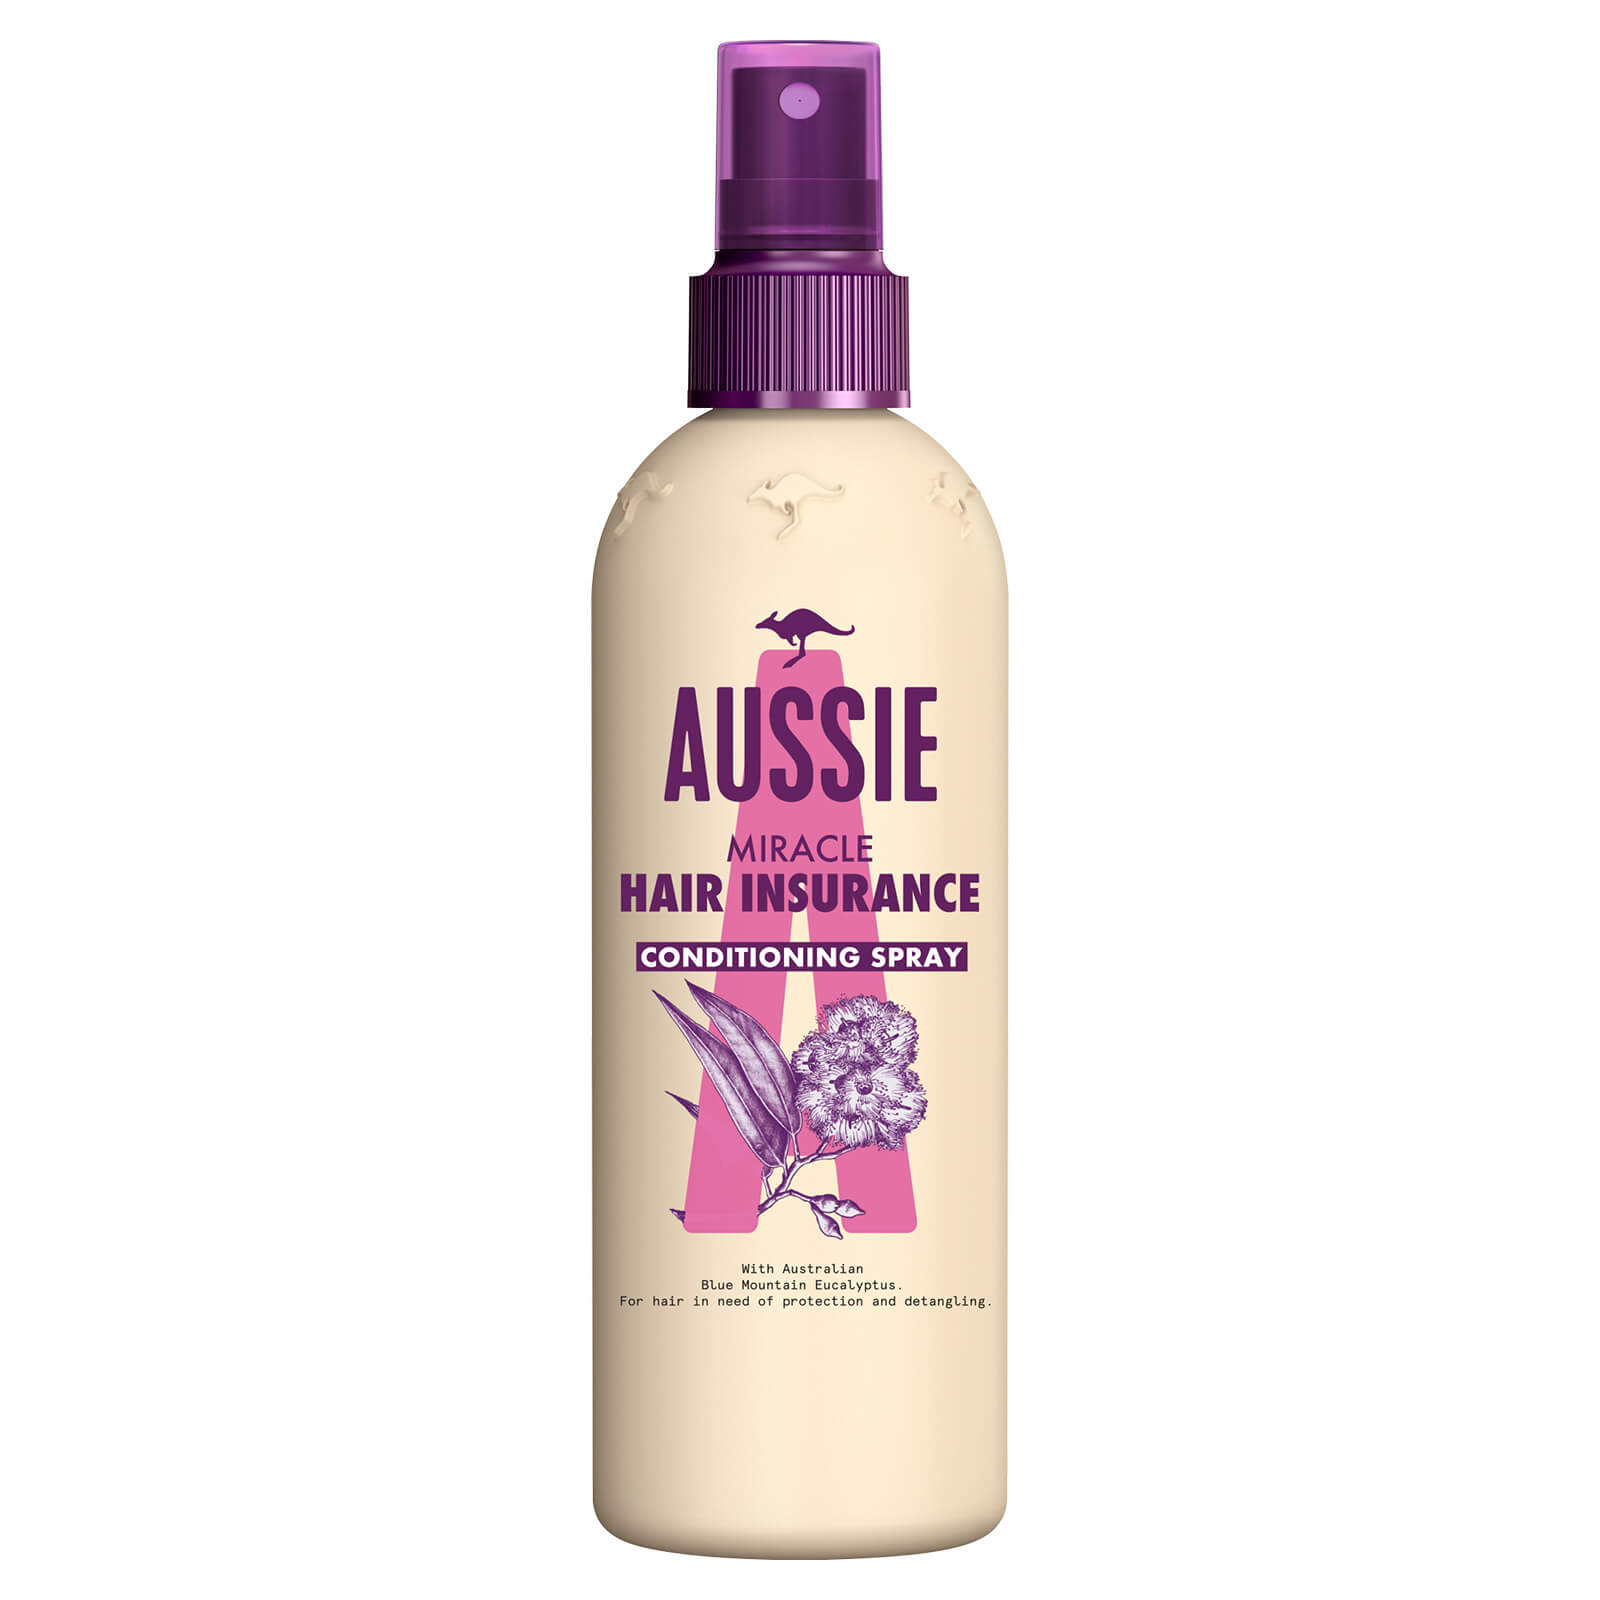 Aussie Hair Insurance Leave-in Hair Conditioner Spray 250ml lookfantastic.com imagine